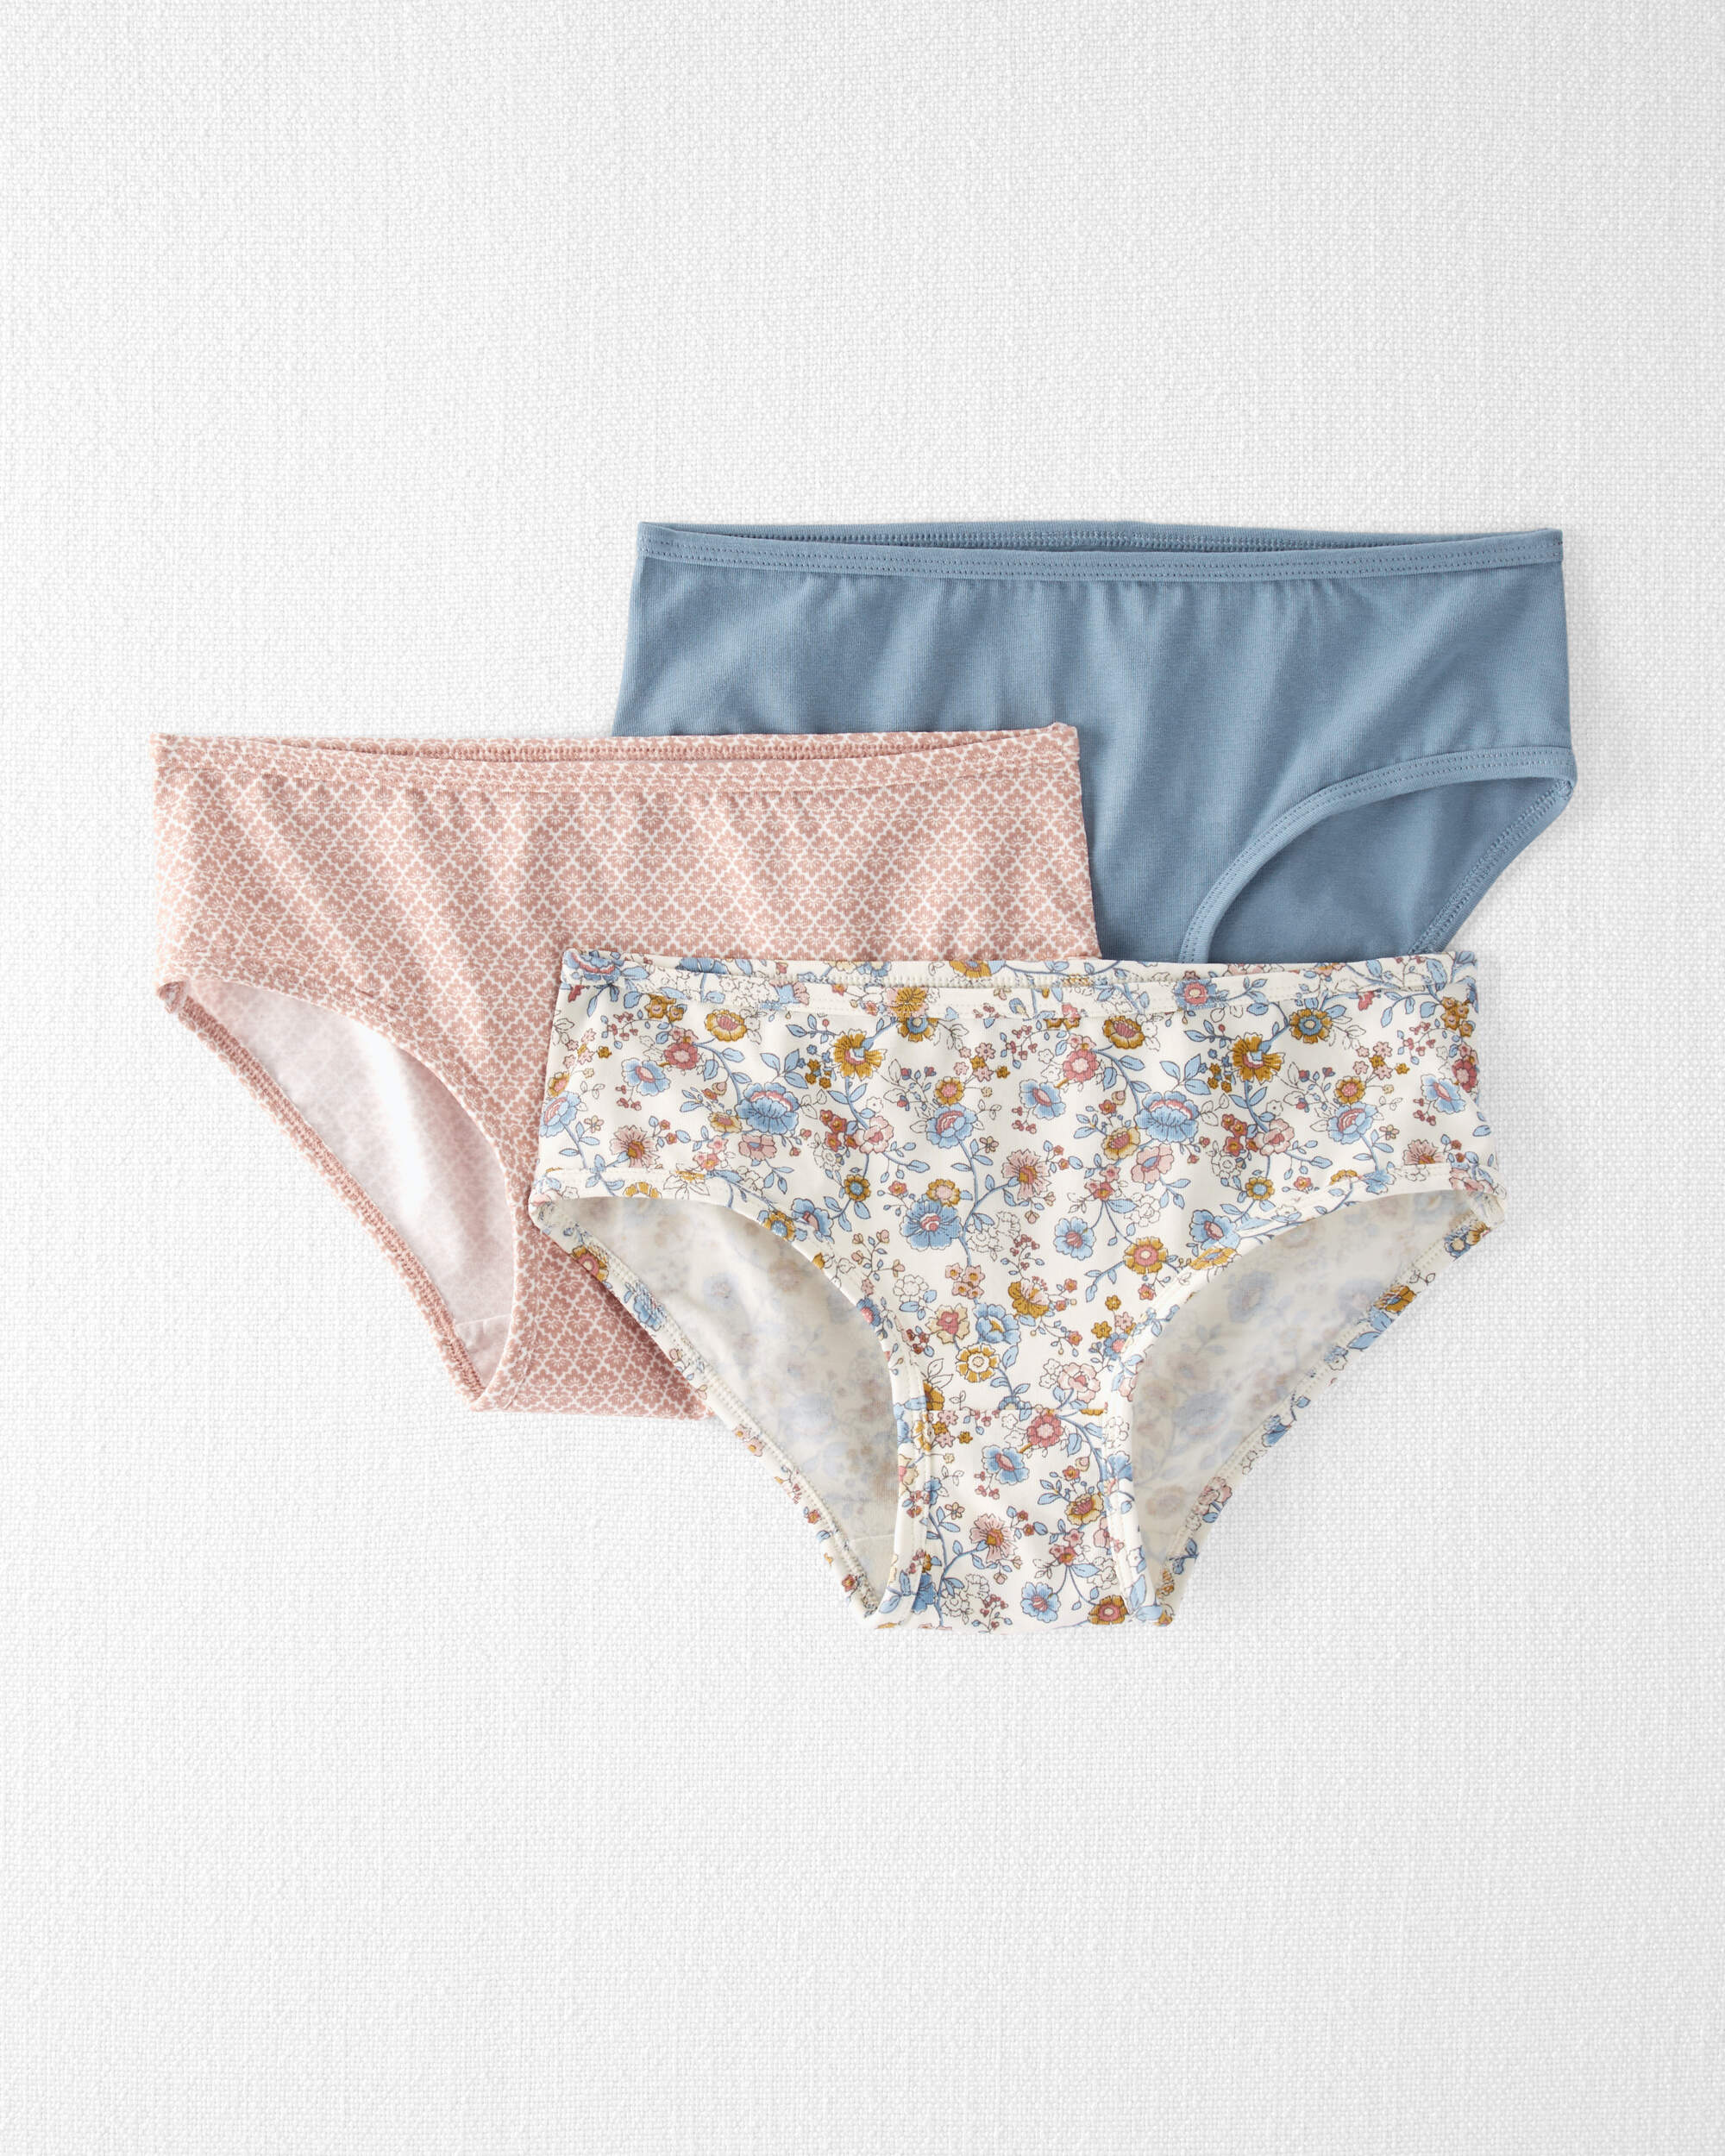  Sladatona Little Girls'Soft Cotton Underwear Comfort